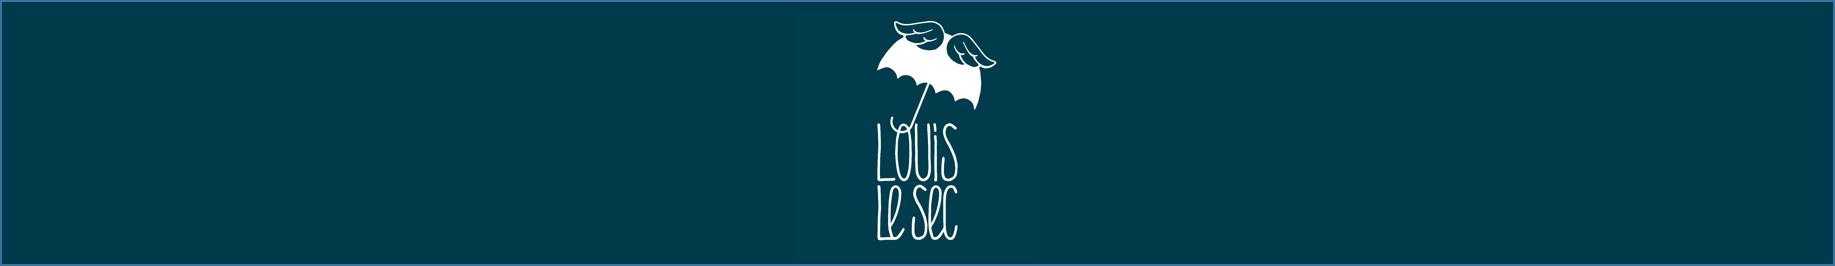 louis-le-sec-logo-1525091336.jpg